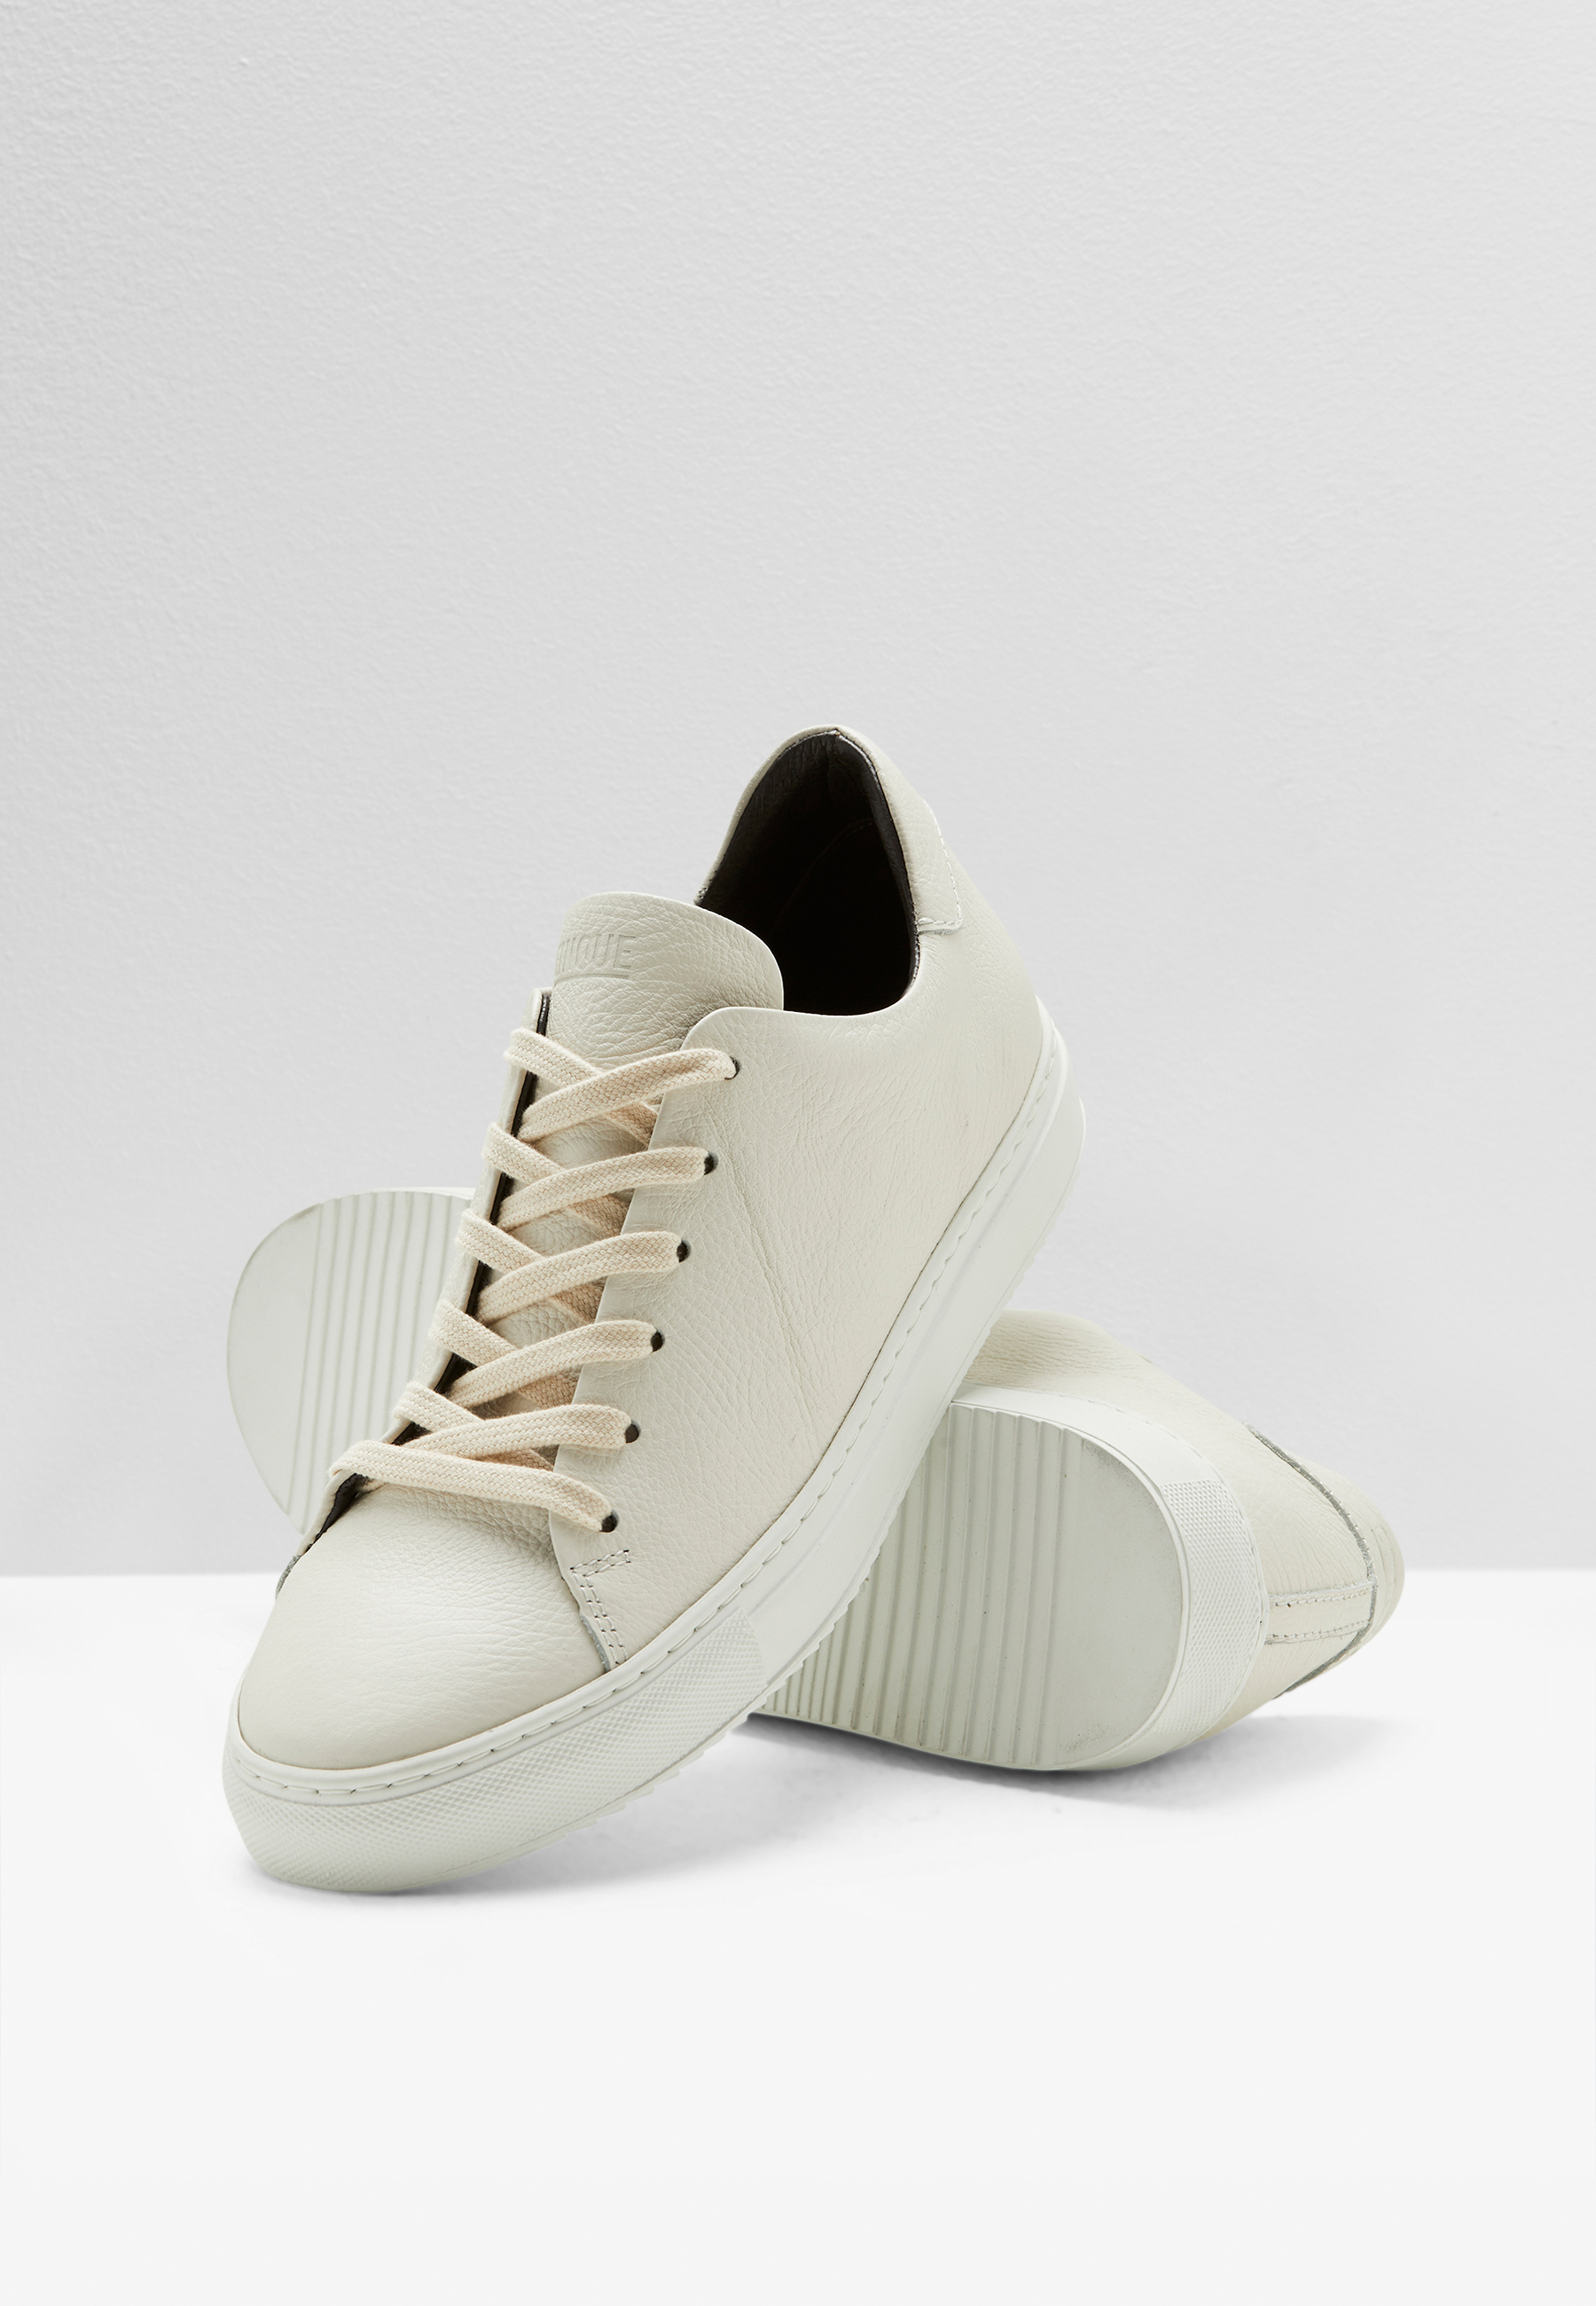 CINQUE 52117-10 CIANTEO Herren Leder Sneaker Weiß